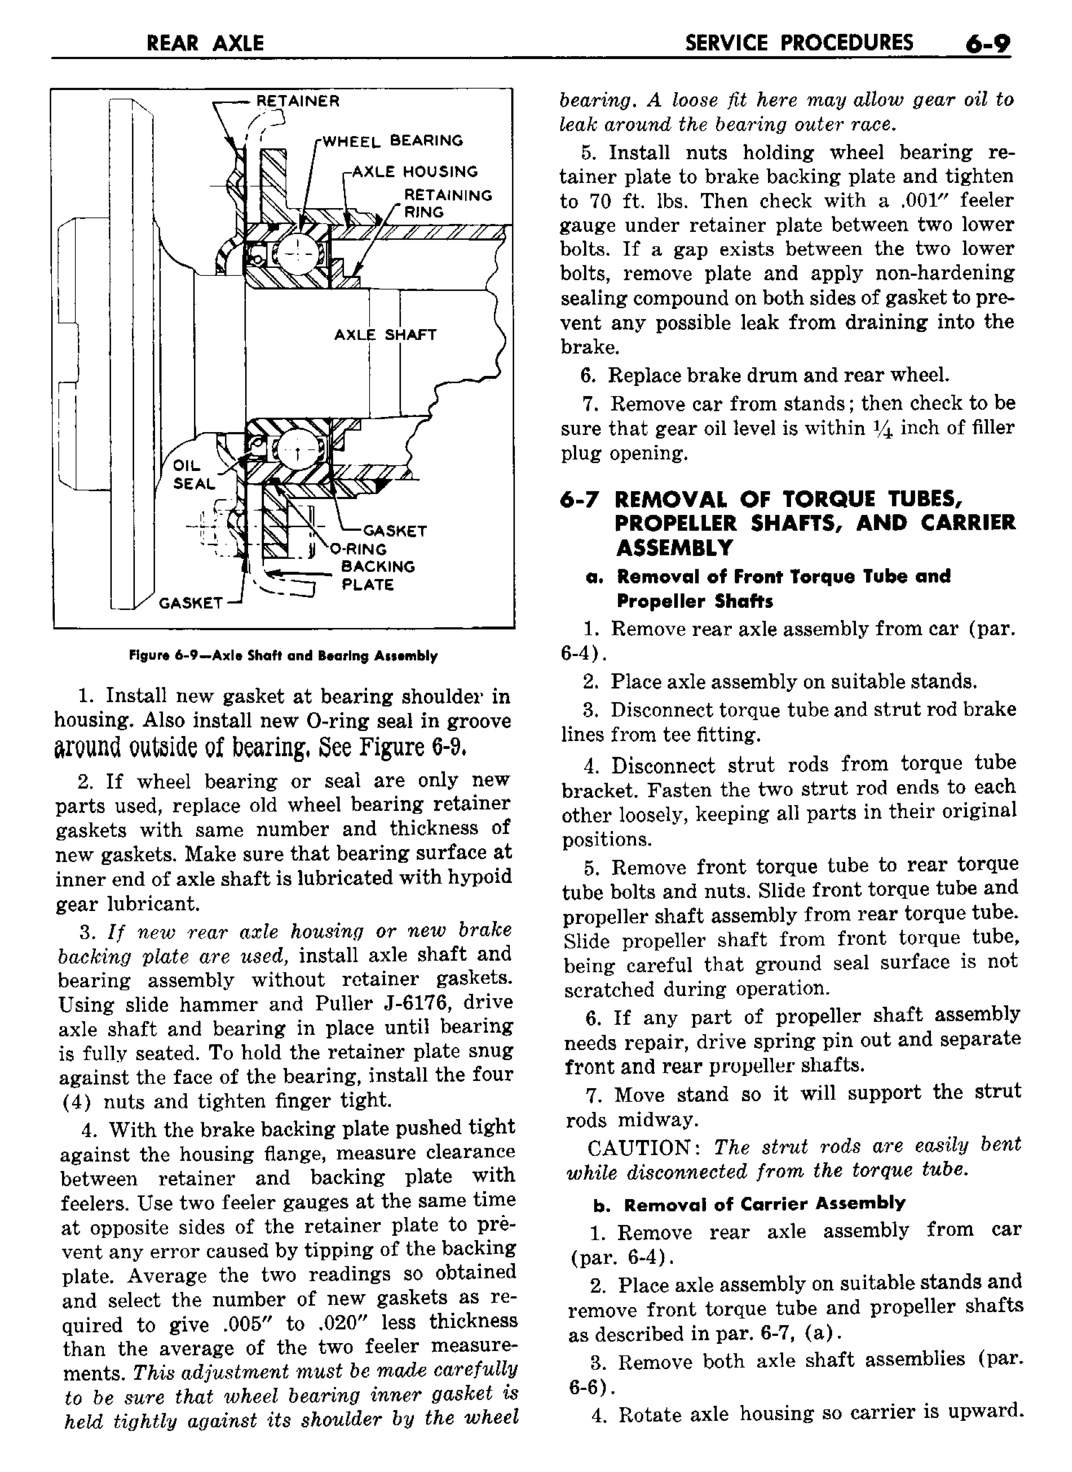 n_07 1960 Buick Shop Manual - Rear Axle-009-009.jpg